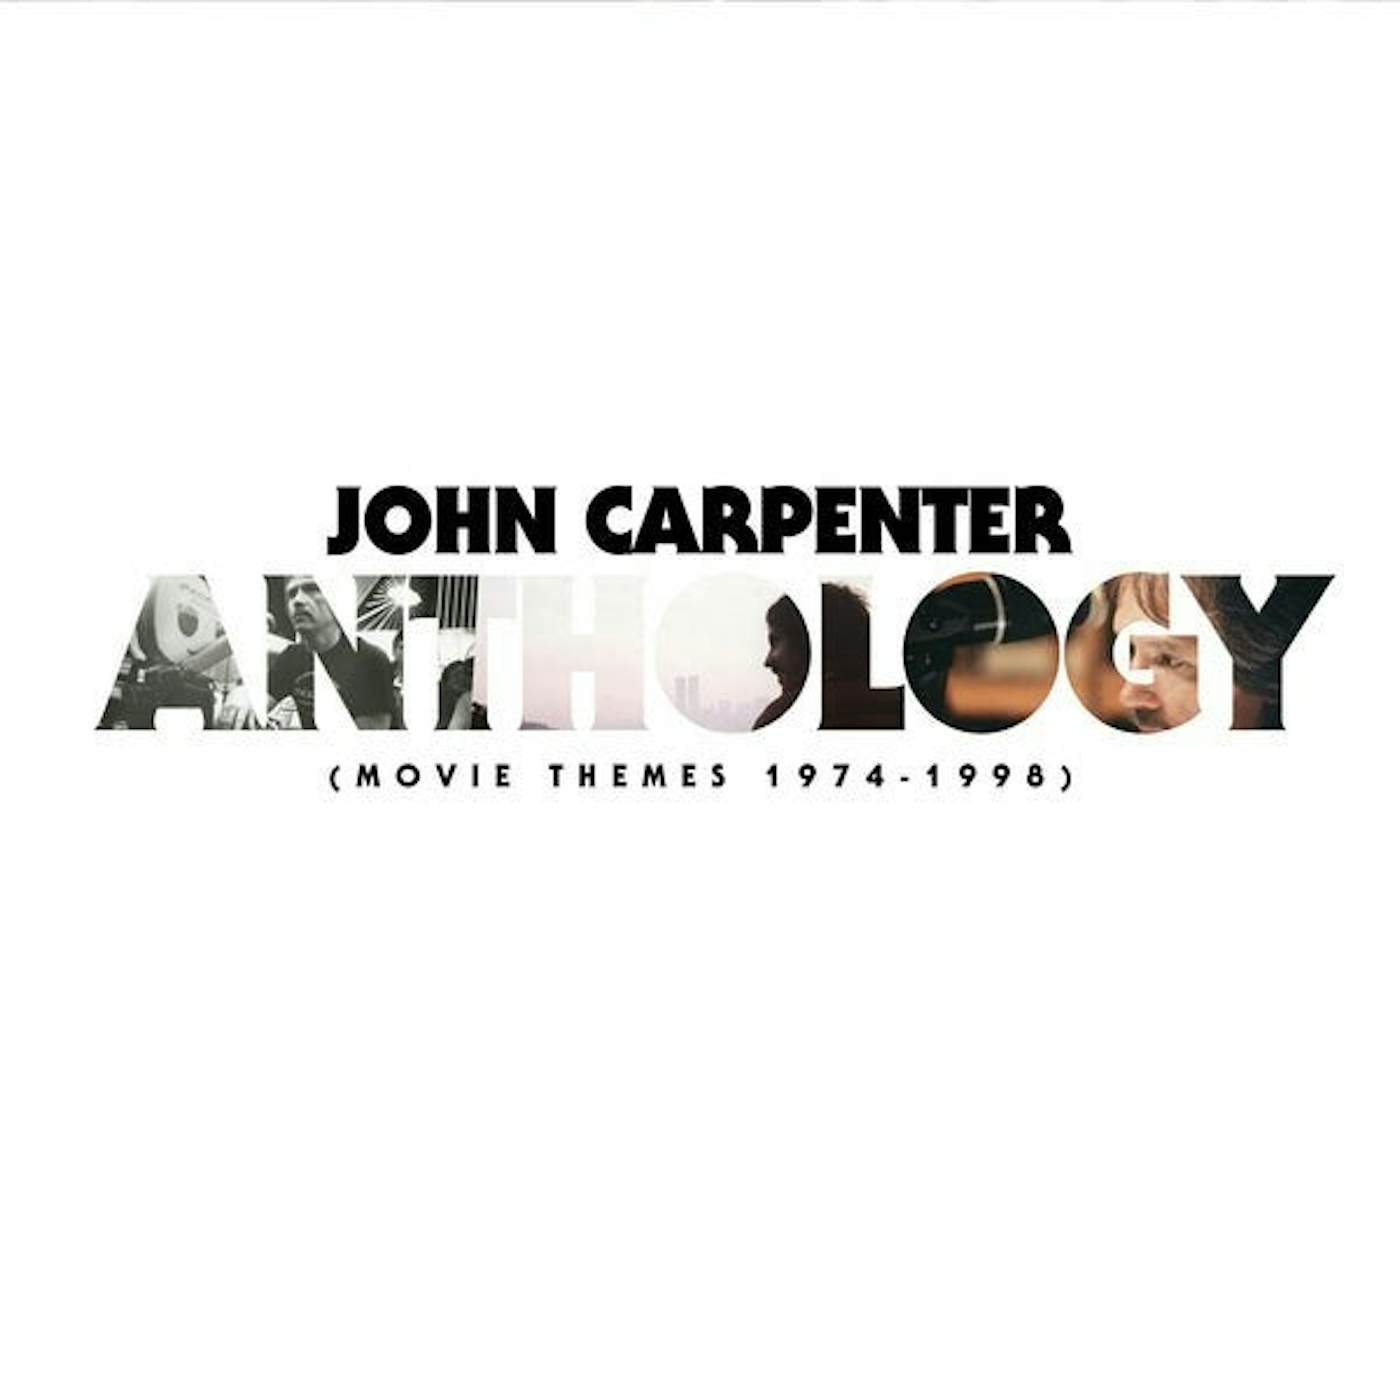 John Carpenter Anthology: Movie Themes 1974-1998 - Purple/Yellow Vinyl Record